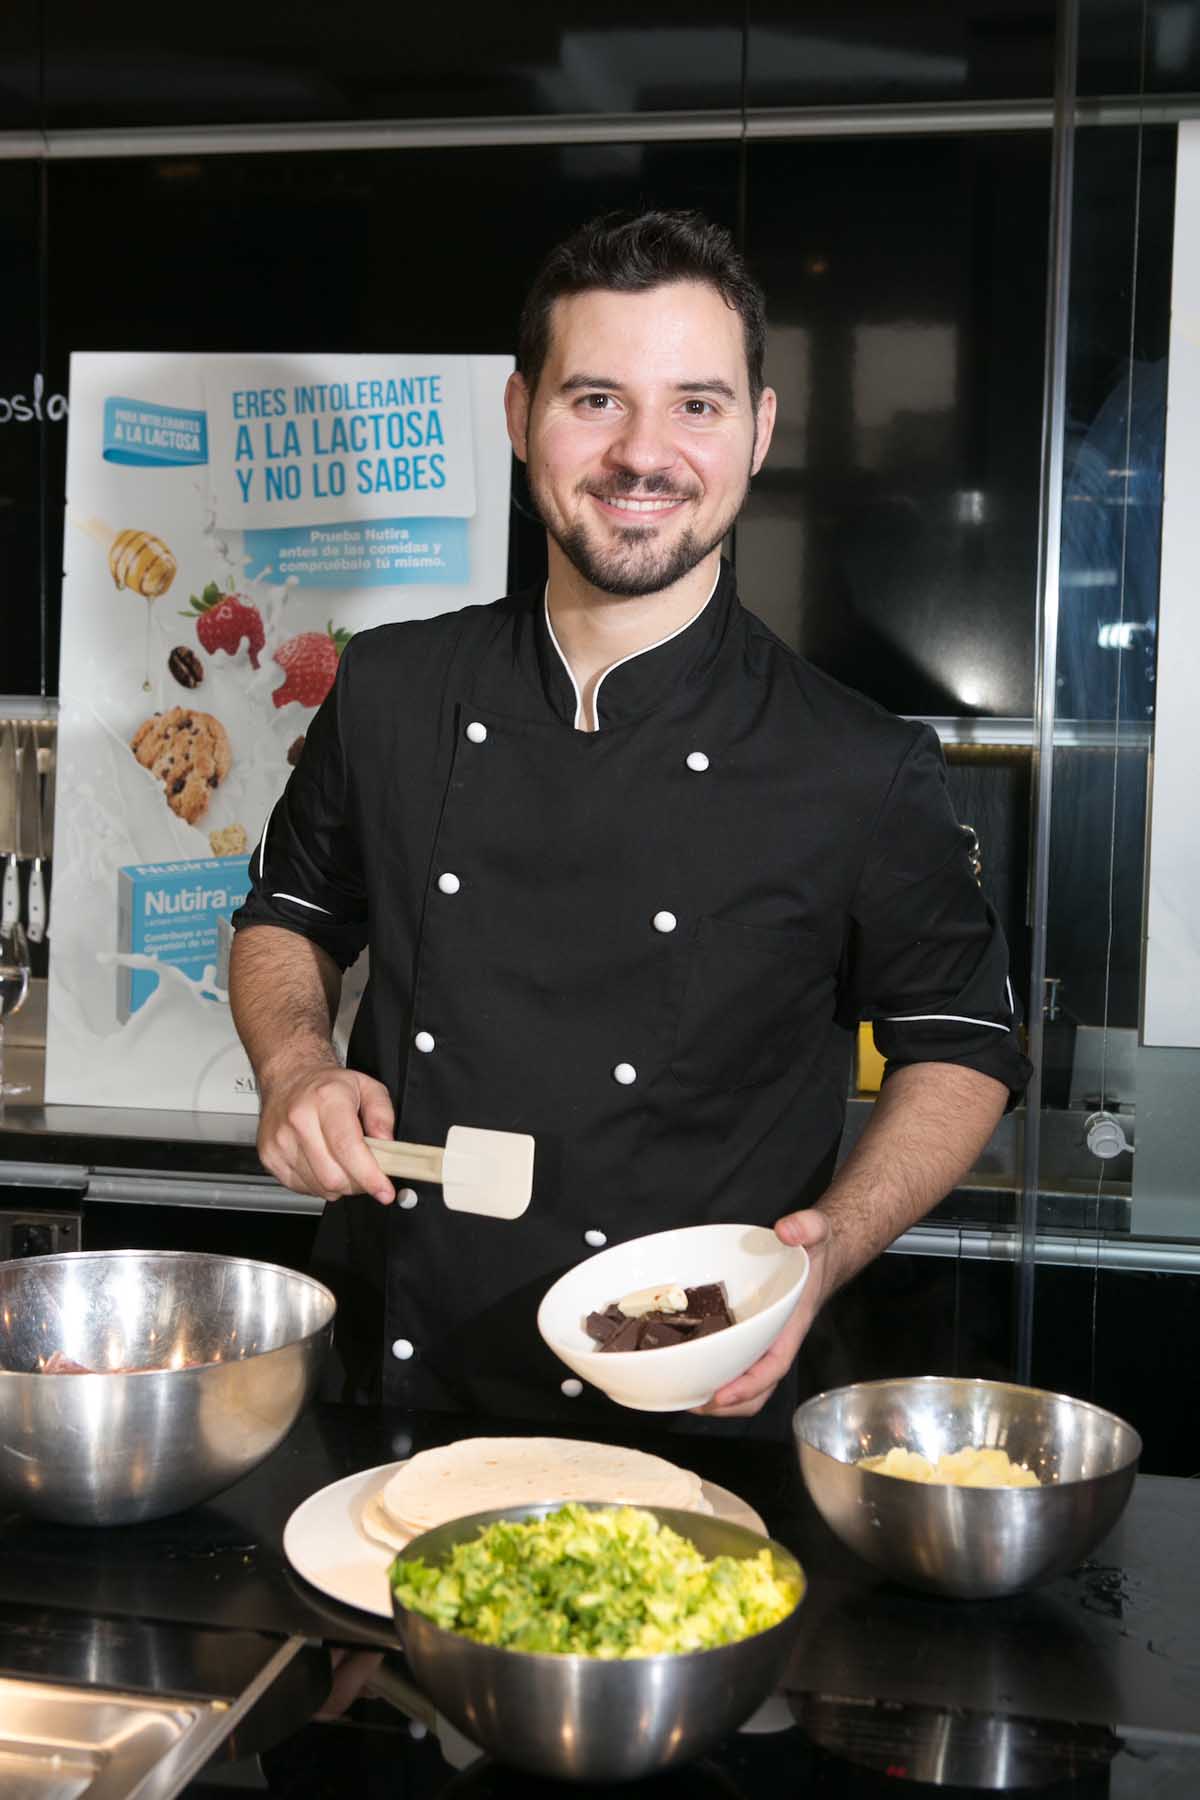 Chef Orielo show cooking Nutira